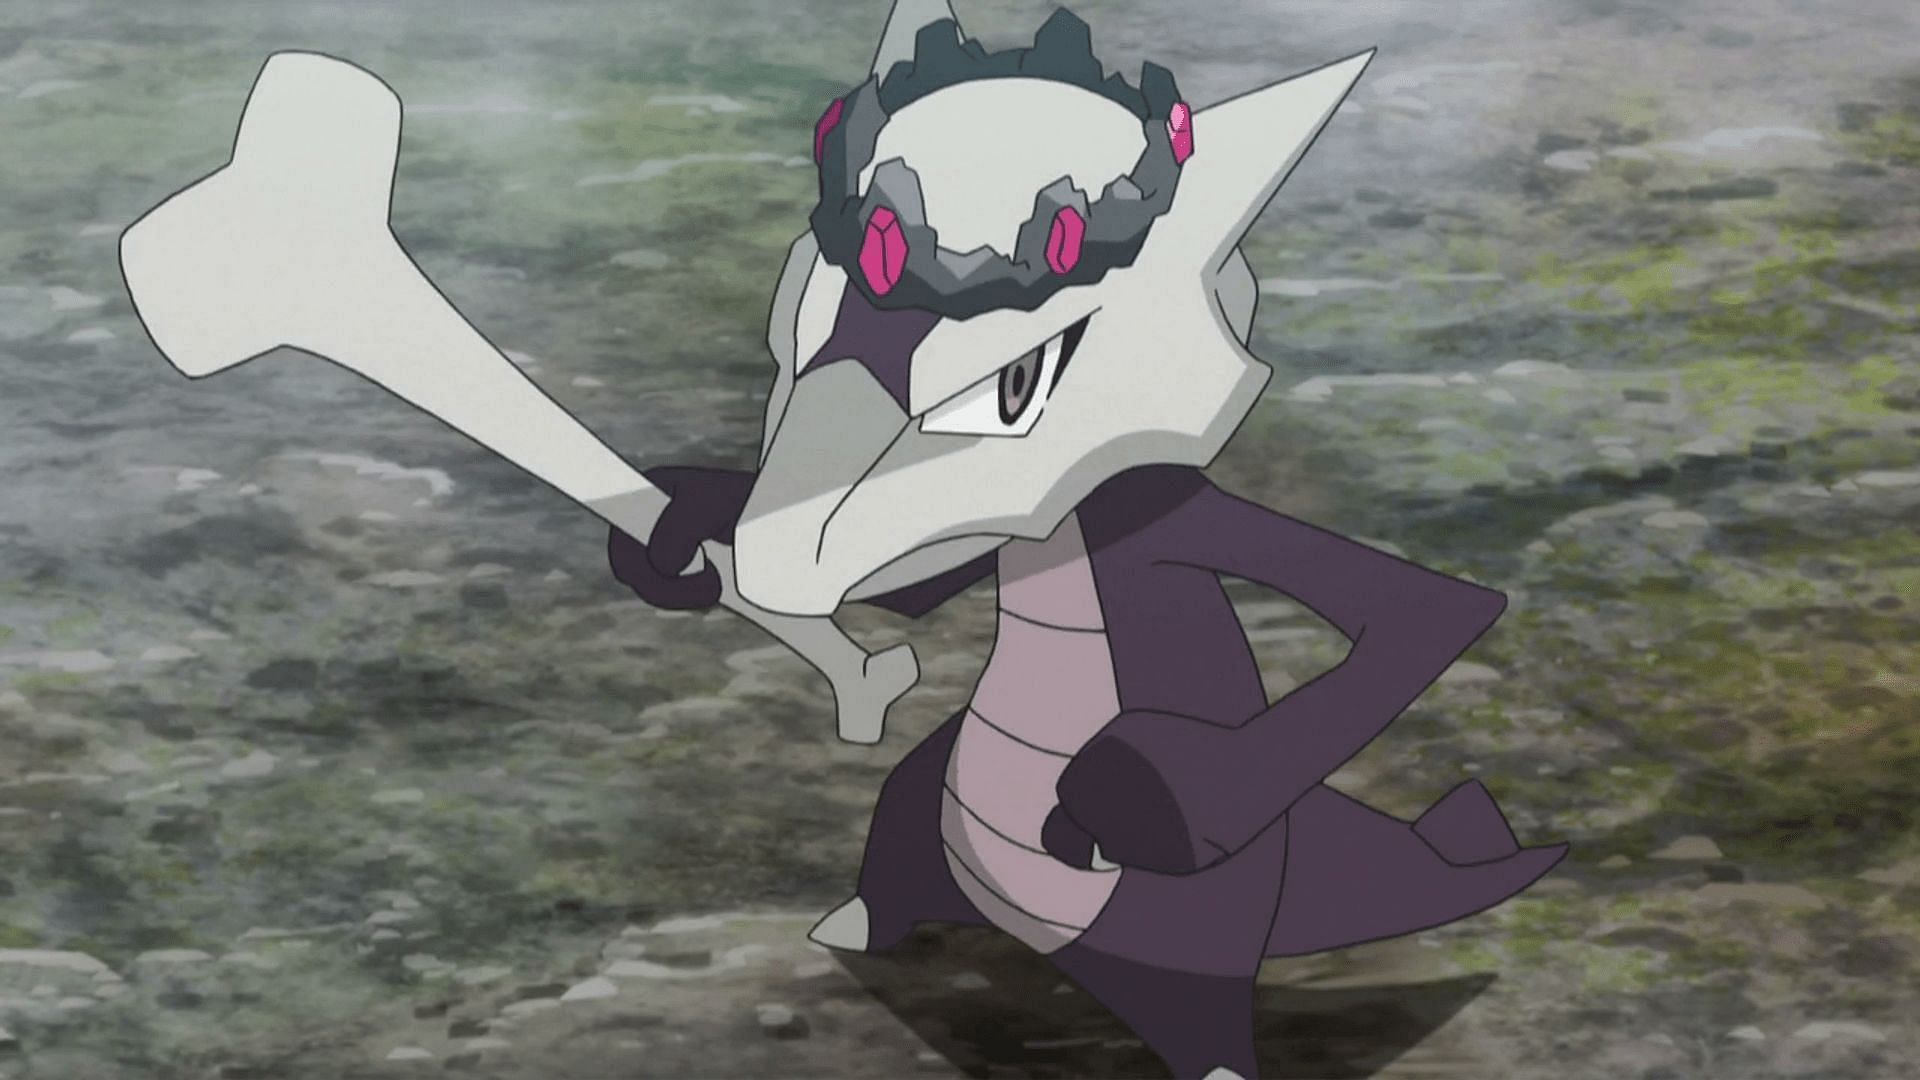 Alolan Marowak as it appears in the anime (Image via The Pokemon Company)